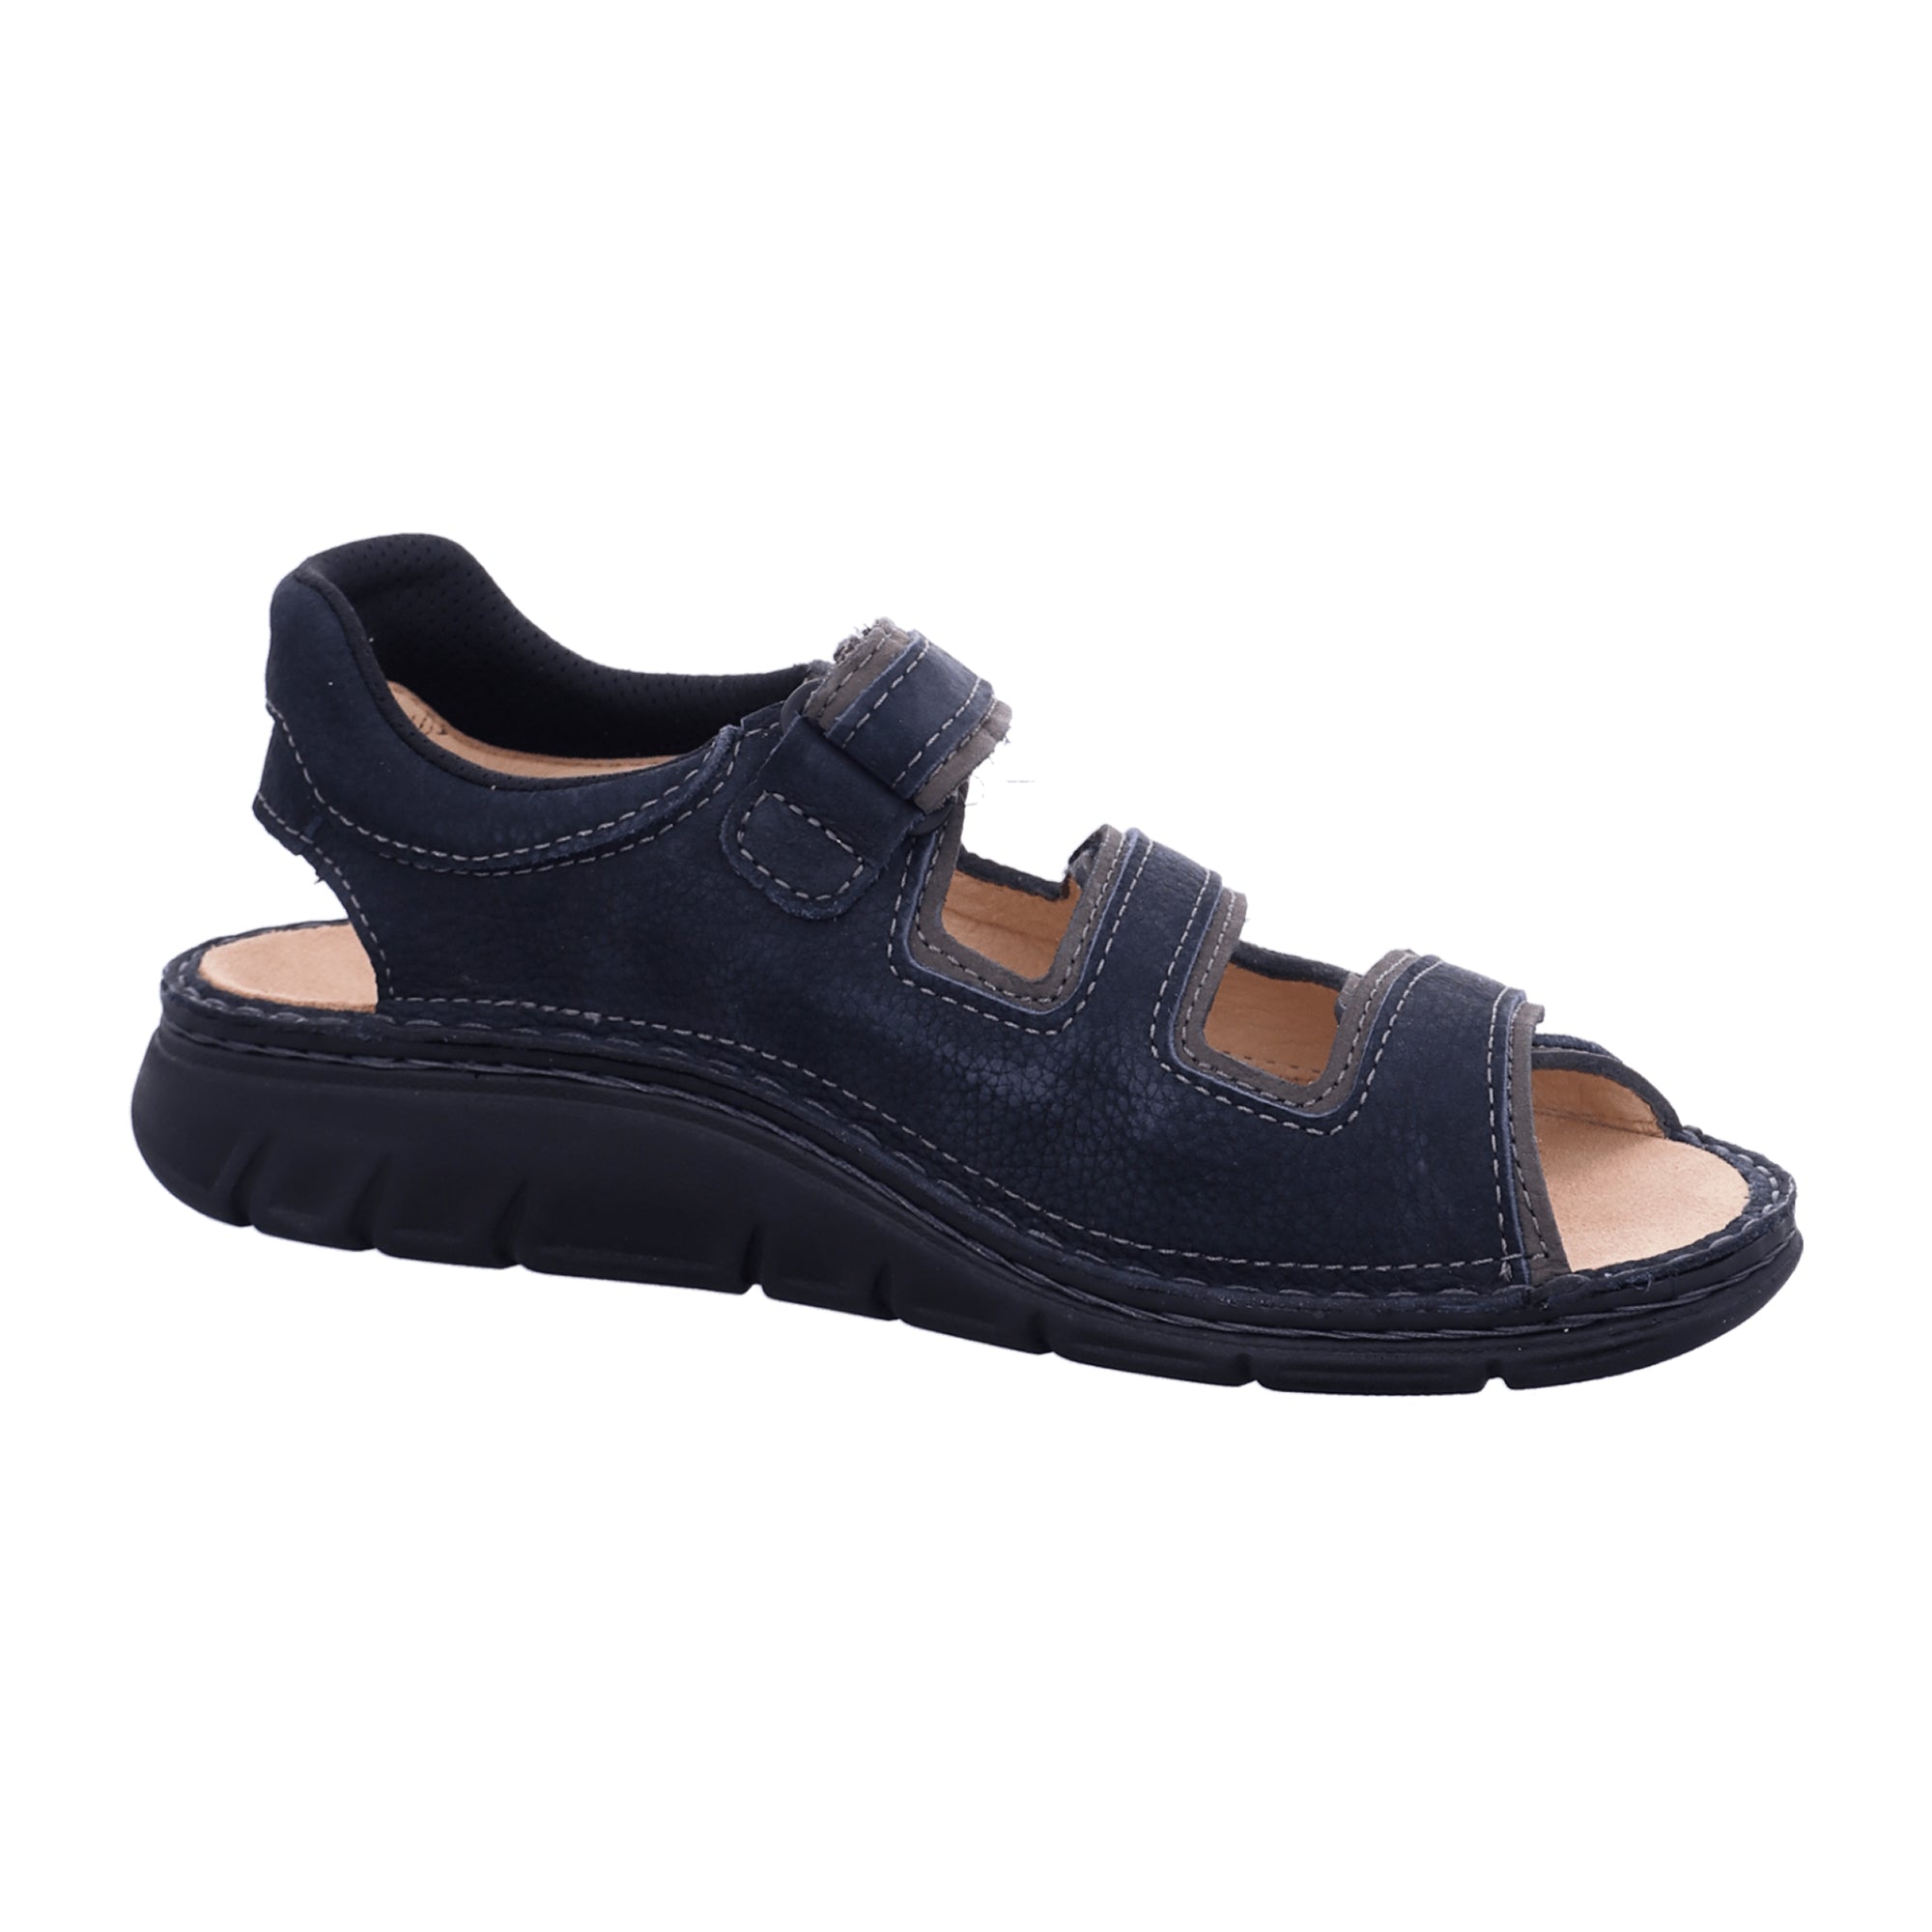 Finn Comfort Casablanca Men's Shoes - Stylish Blue Leather Comfort Sneakers